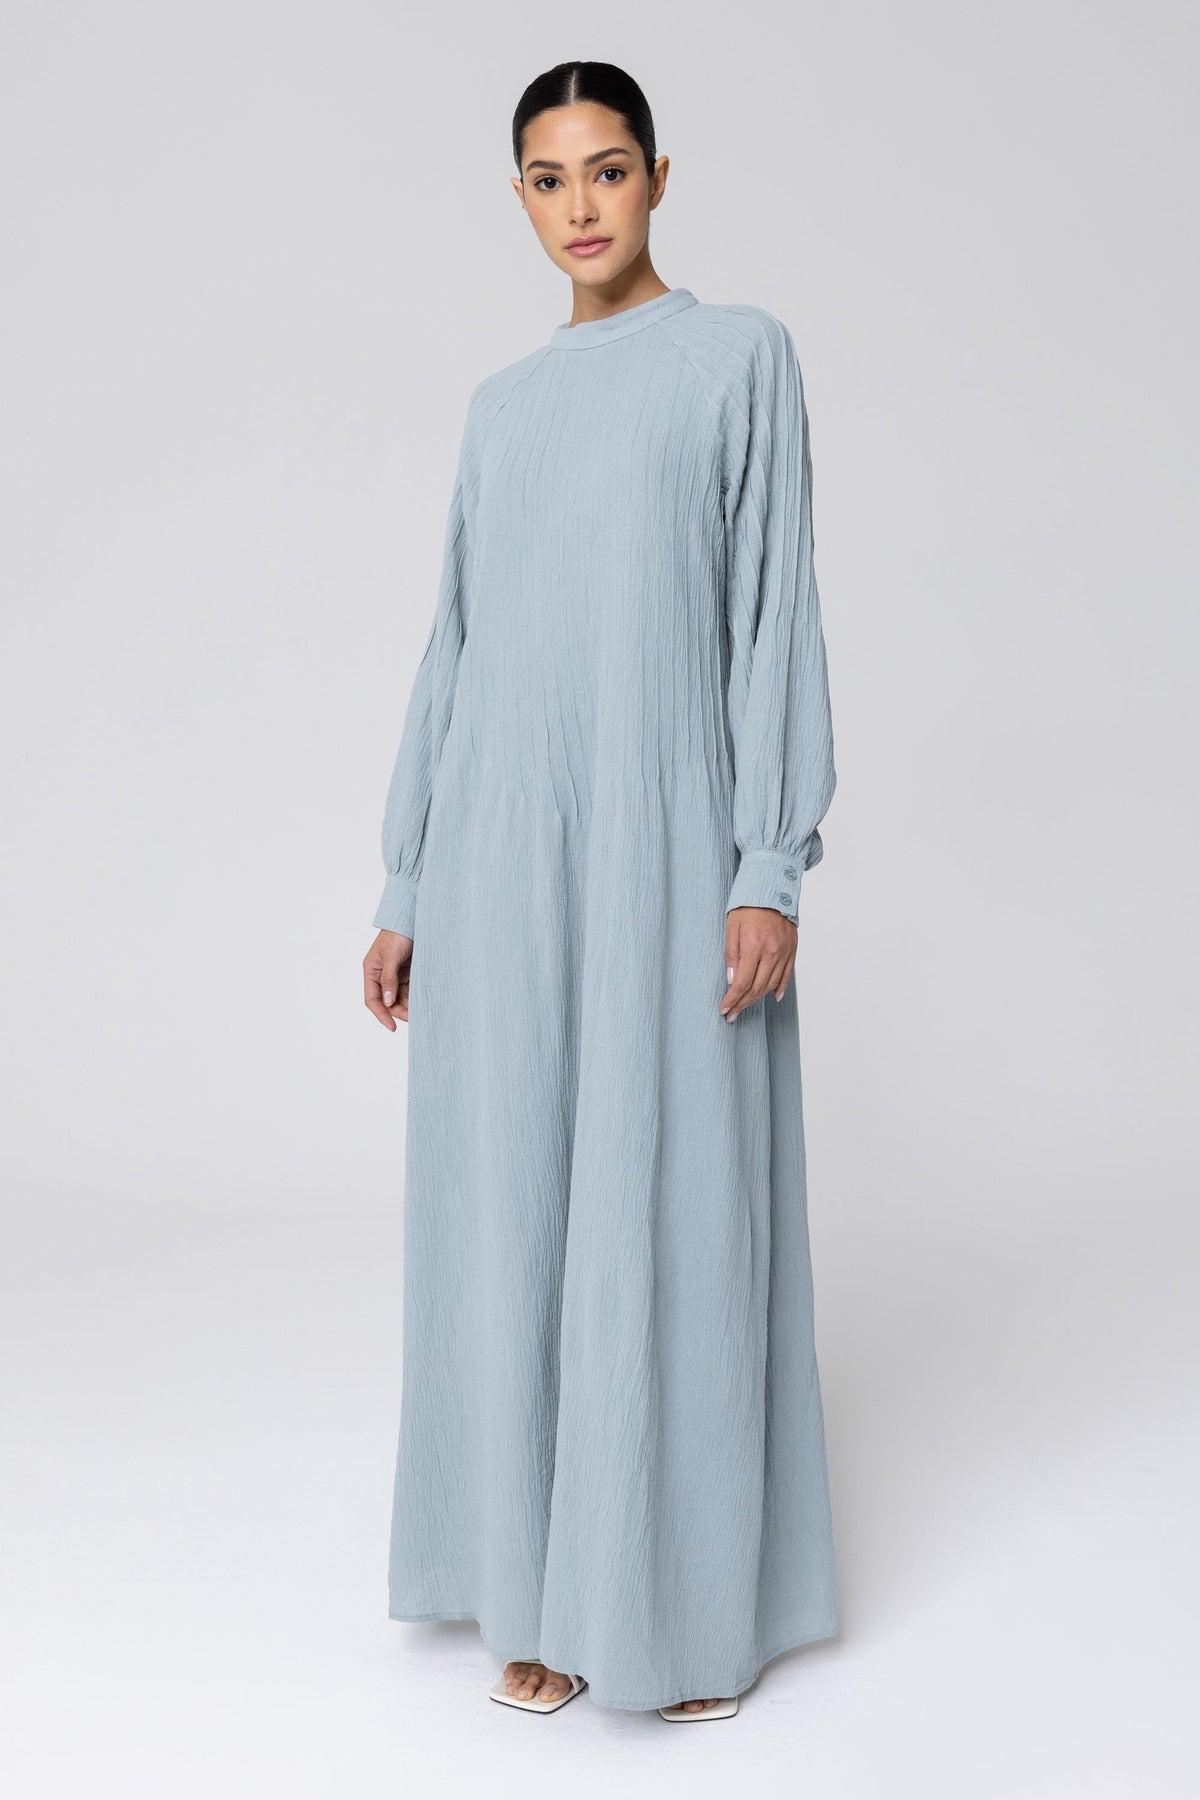 Hanifa Balloon Sleeve Maxi Dress - Stillwater Veiled Collection 